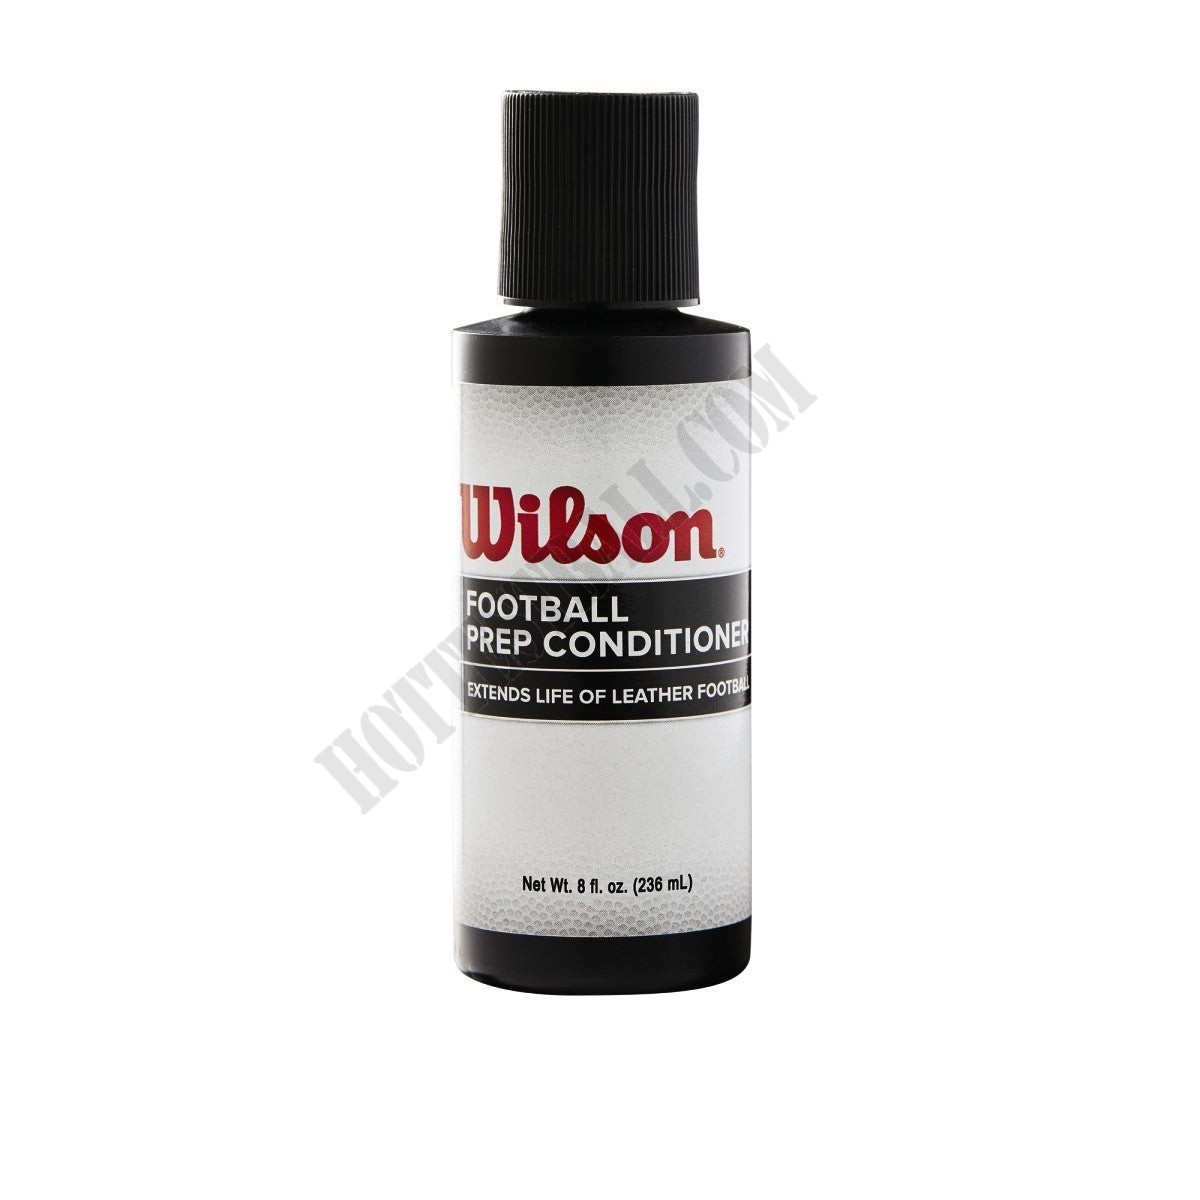 Football Prep Conditioner (8 oz) - Wilson Discount Store - Football Prep Conditioner (8 oz) - Wilson Discount Store